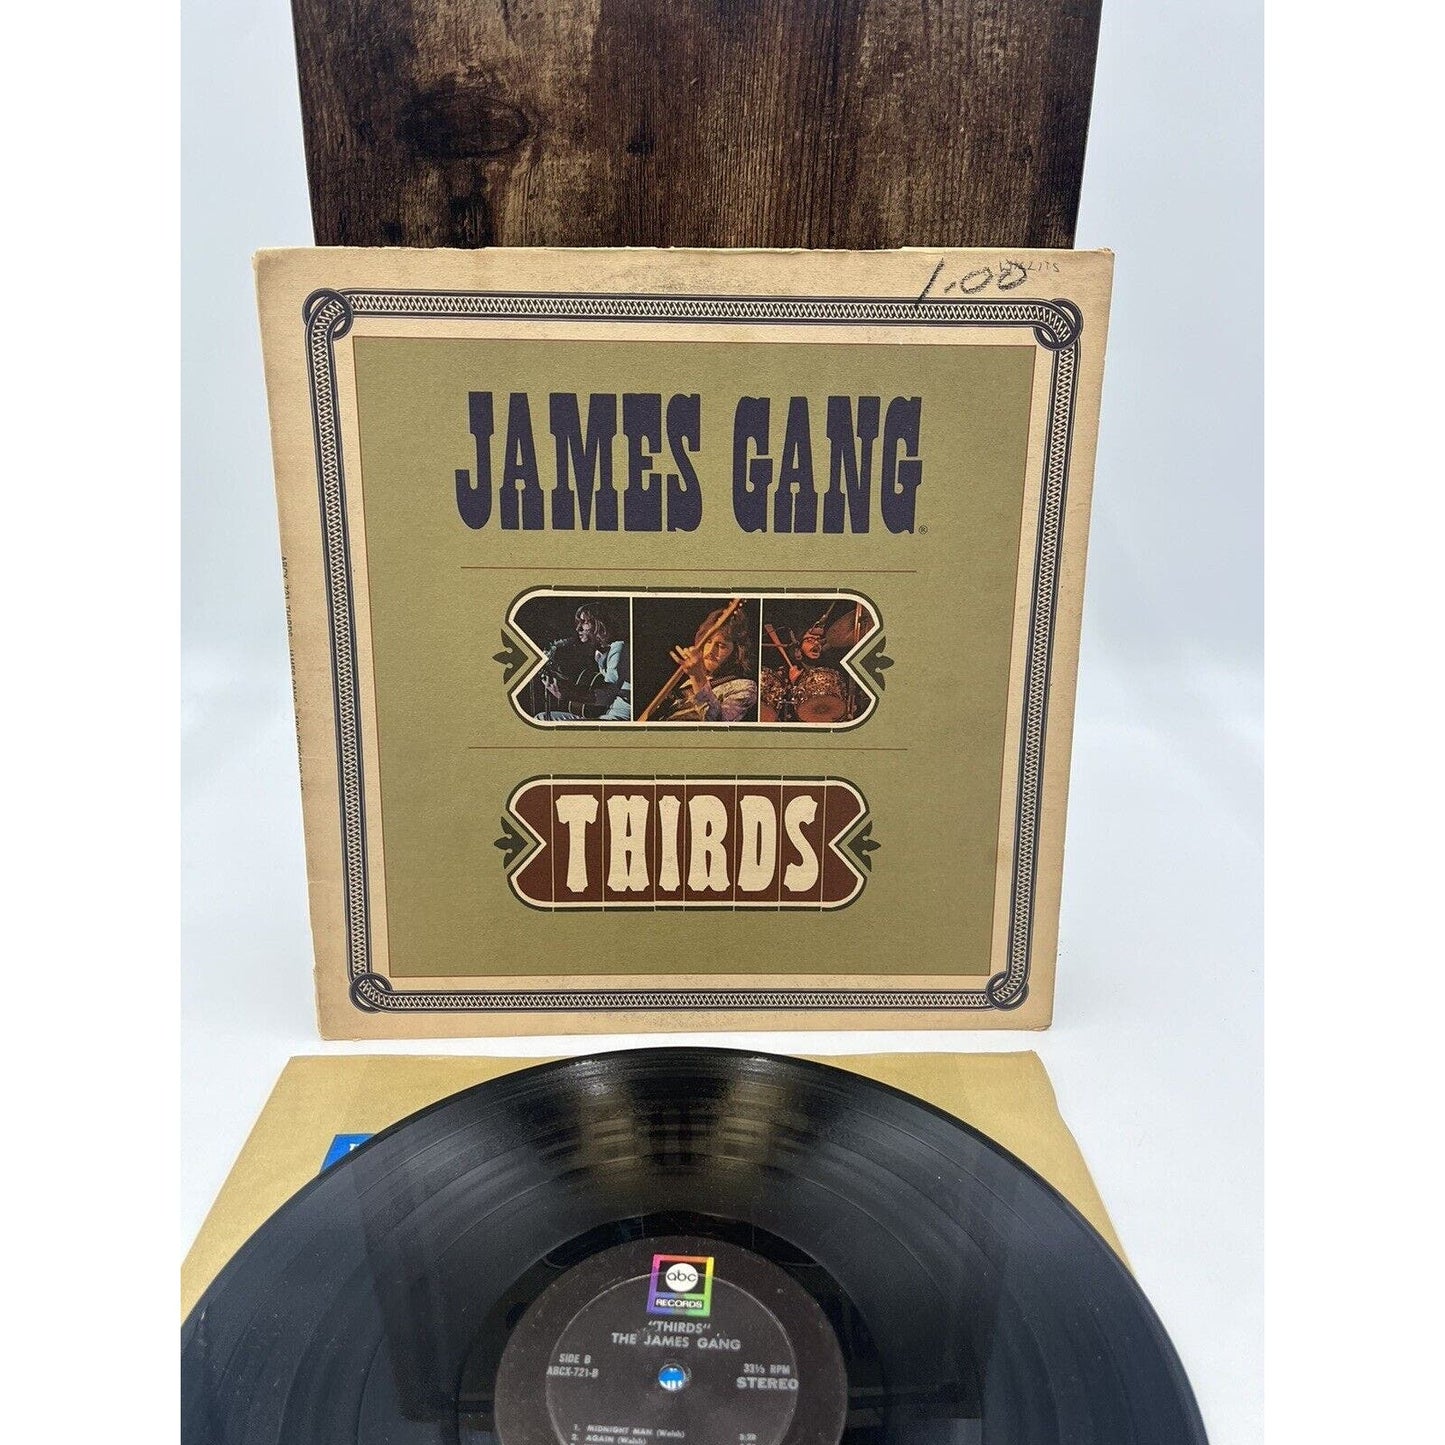 THE JAMES GANG THIRDS VINYL RECORD ALBUM LP ABCX-721 VG/VG